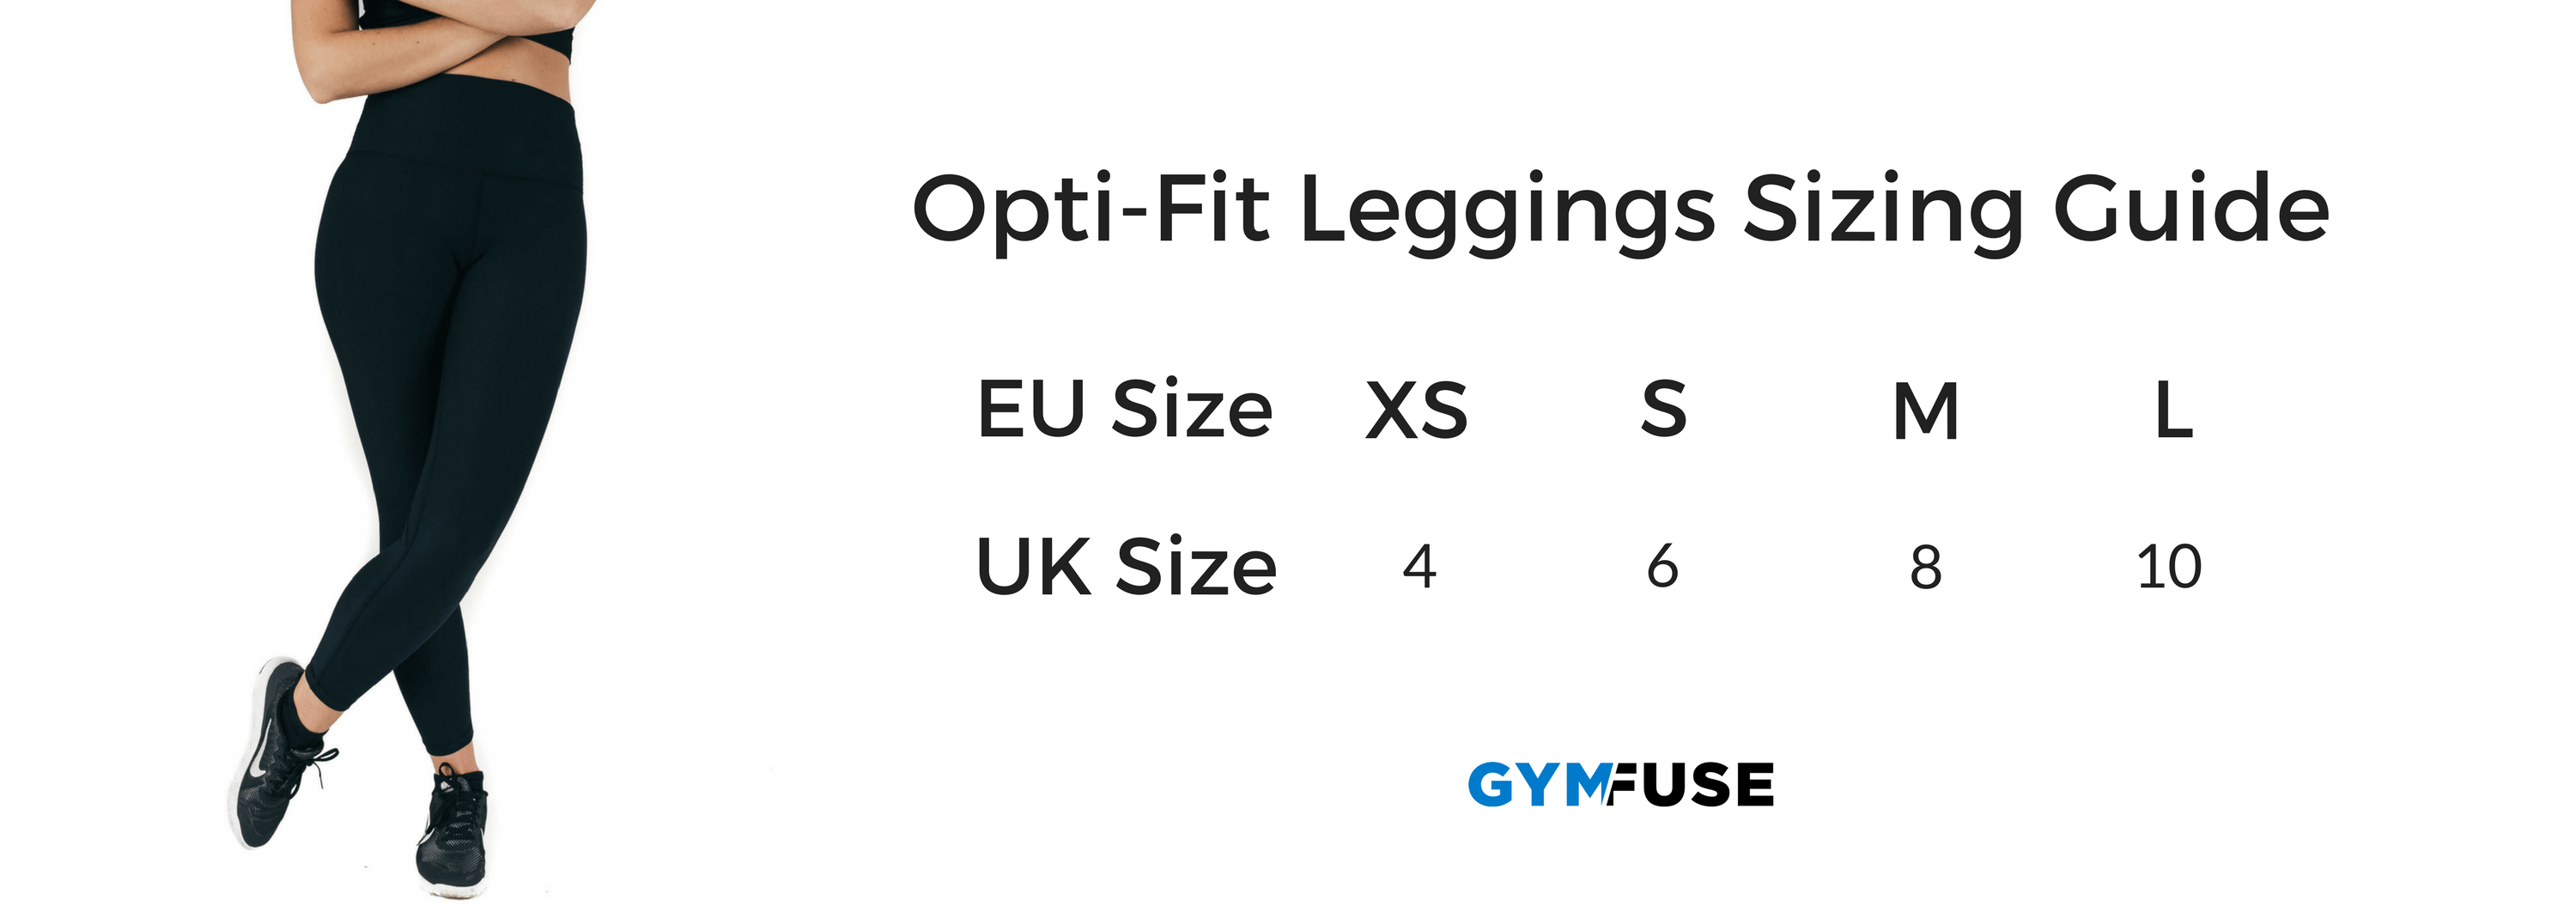 Size Guide Women's Opti-Fit Leggings